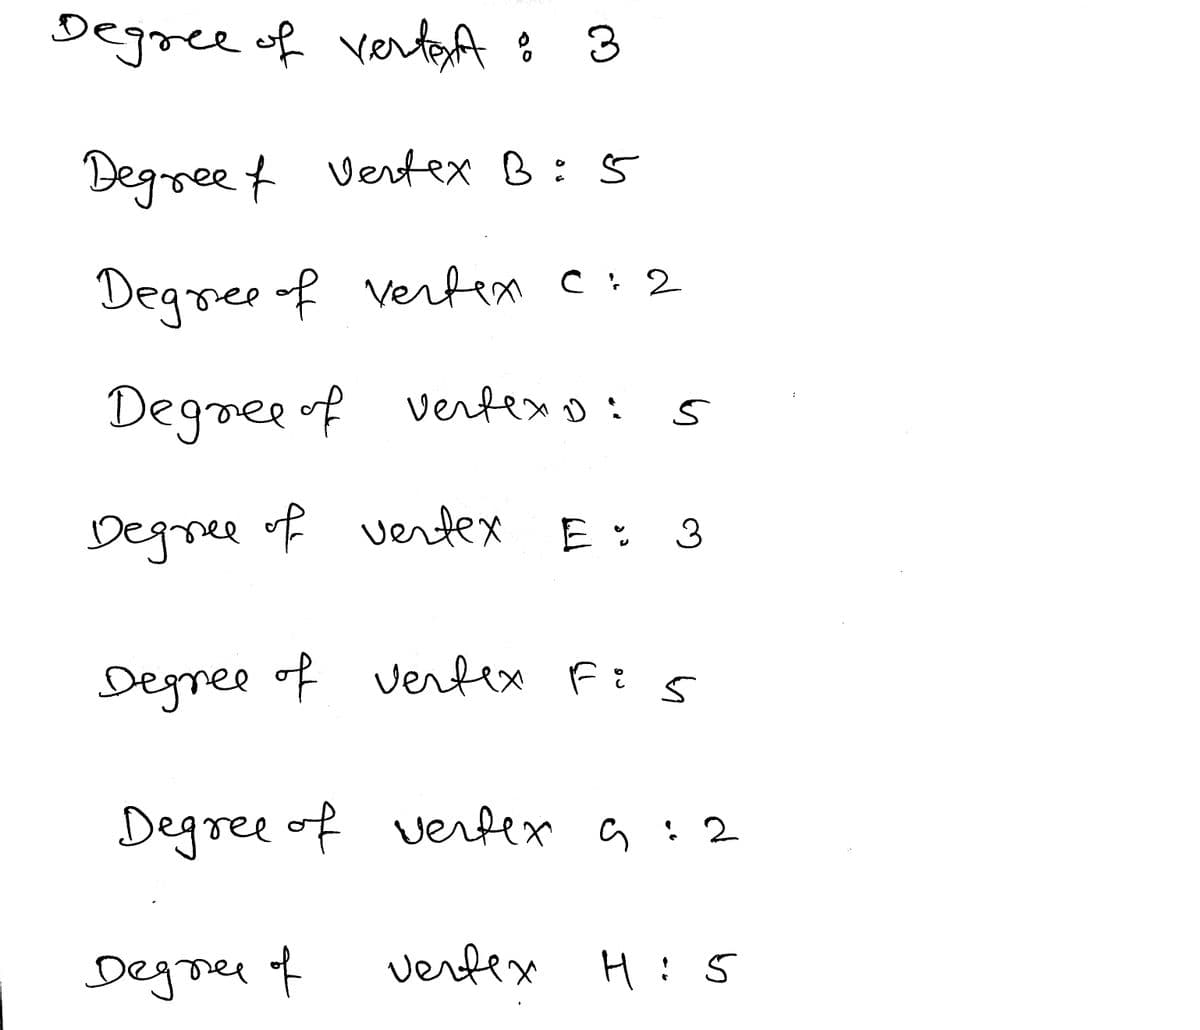 Degree of vertext:
3
Degree of Vertex B: 5
Degree of vertex C÷2
Degree of vertex D):
ड
Degree of vertex
E 3
Degree of vertex Fis
Degree of vertex 9:2
a
Degree of
vertex
H: 5